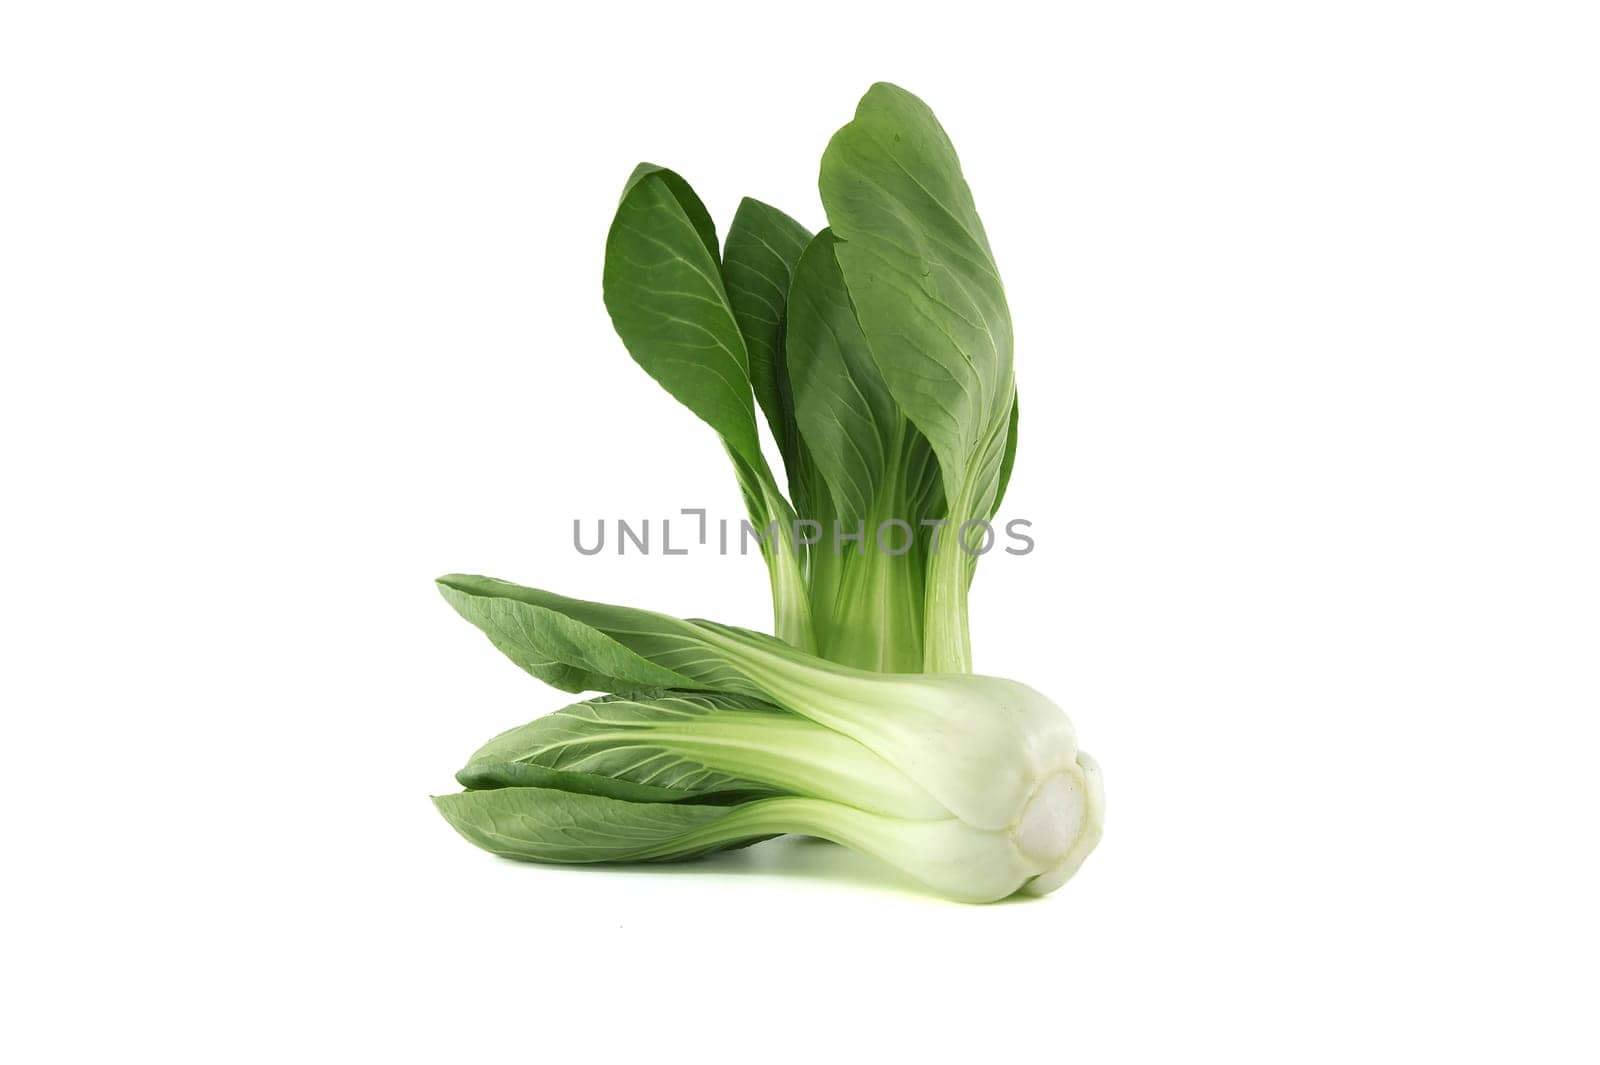 Pok choi vegetables arranged on white background by NetPix